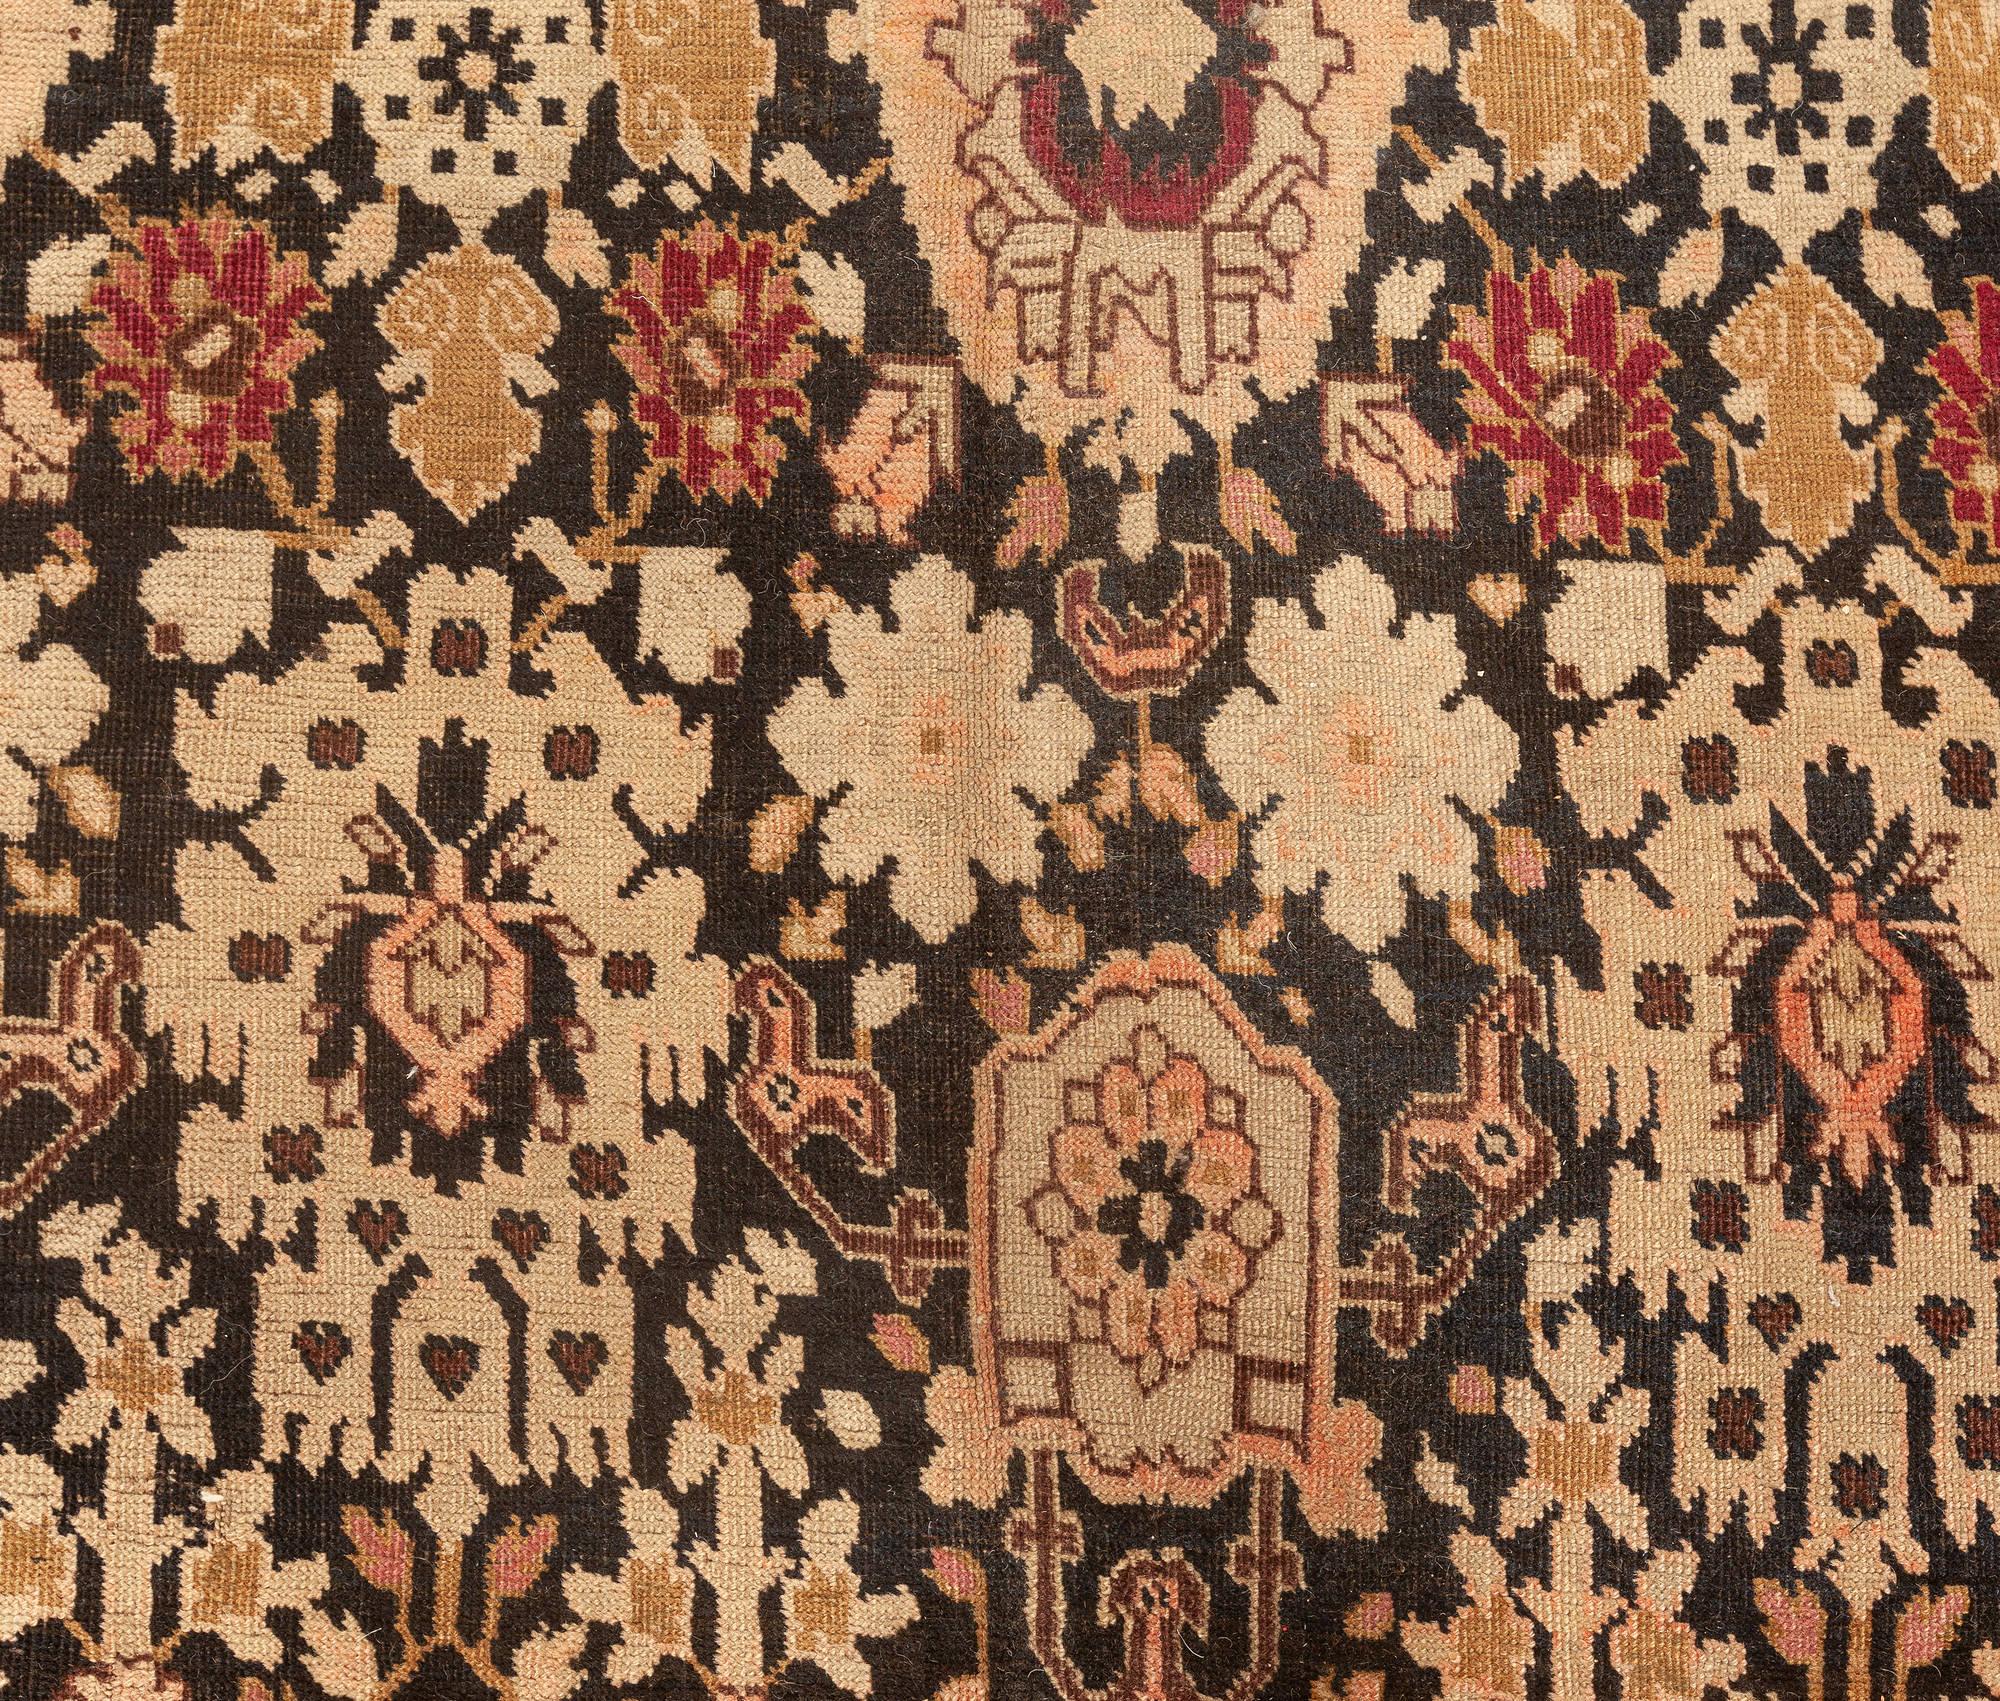 Authentic 19th century Karabagh botanic handmade wool carpet
Size: 6'6